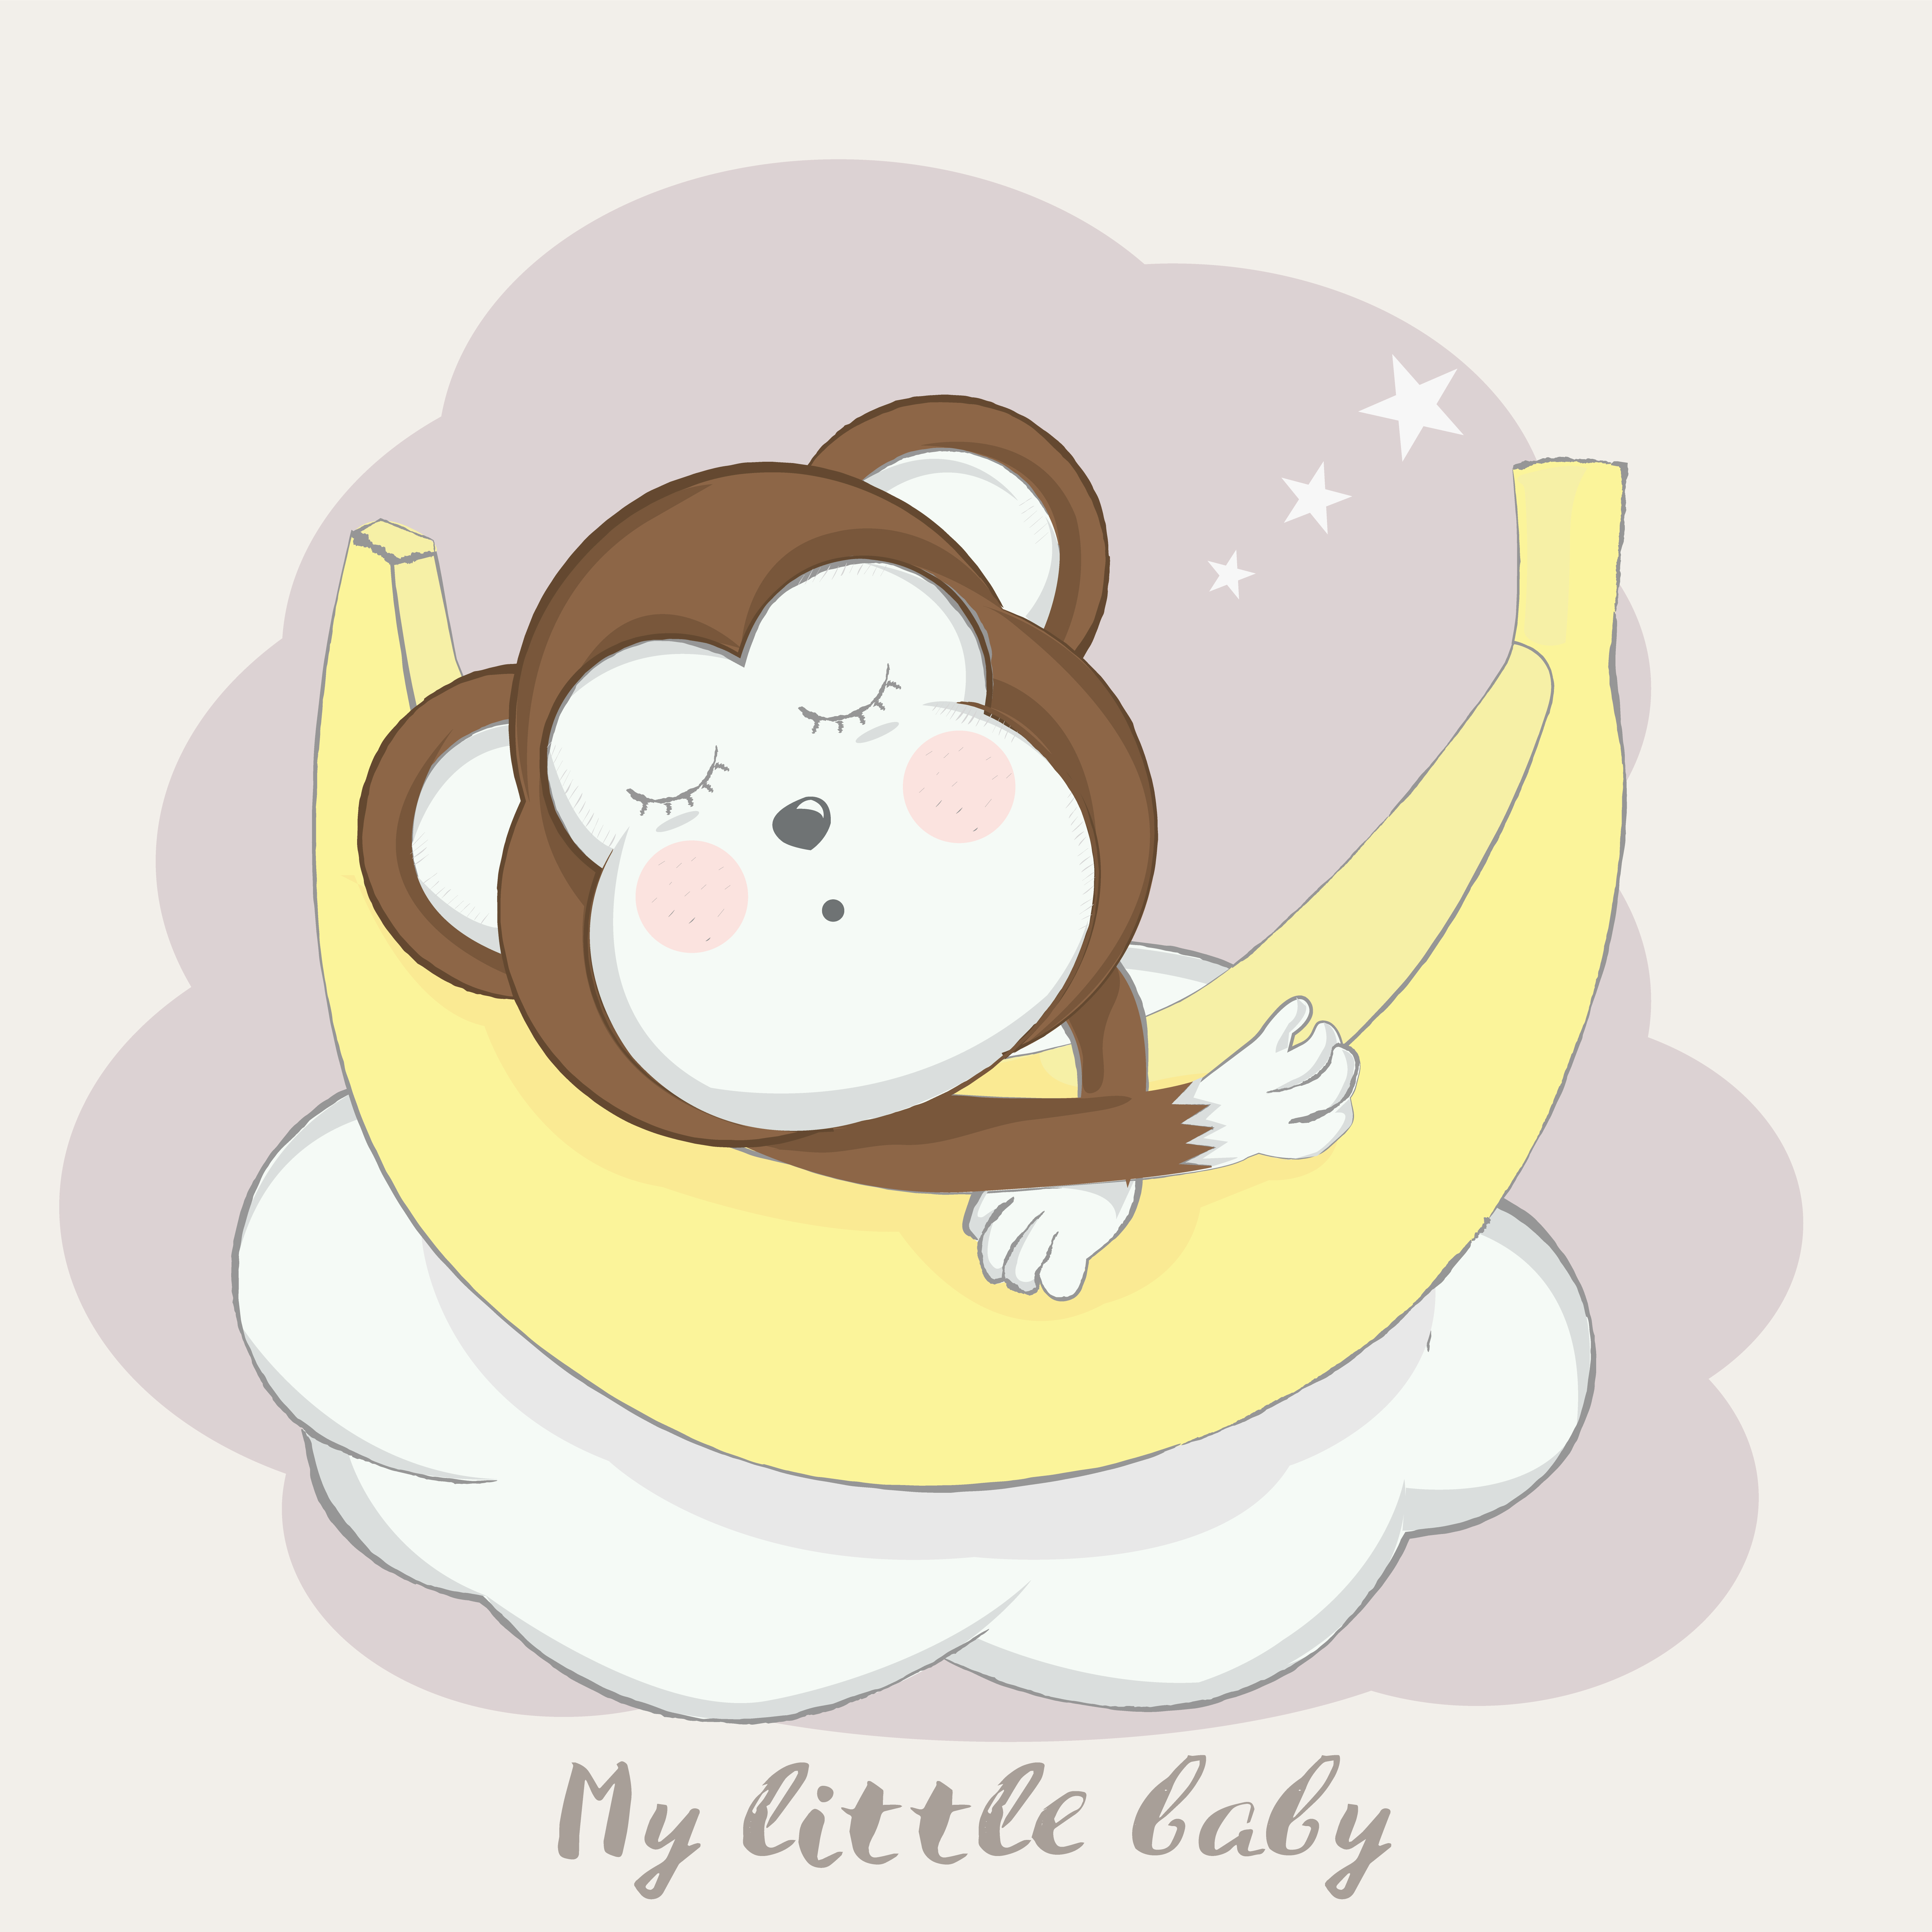 Cute Baby Monkey With Banana 6681 Download Free Vectors Clipart Graphics Vector Art